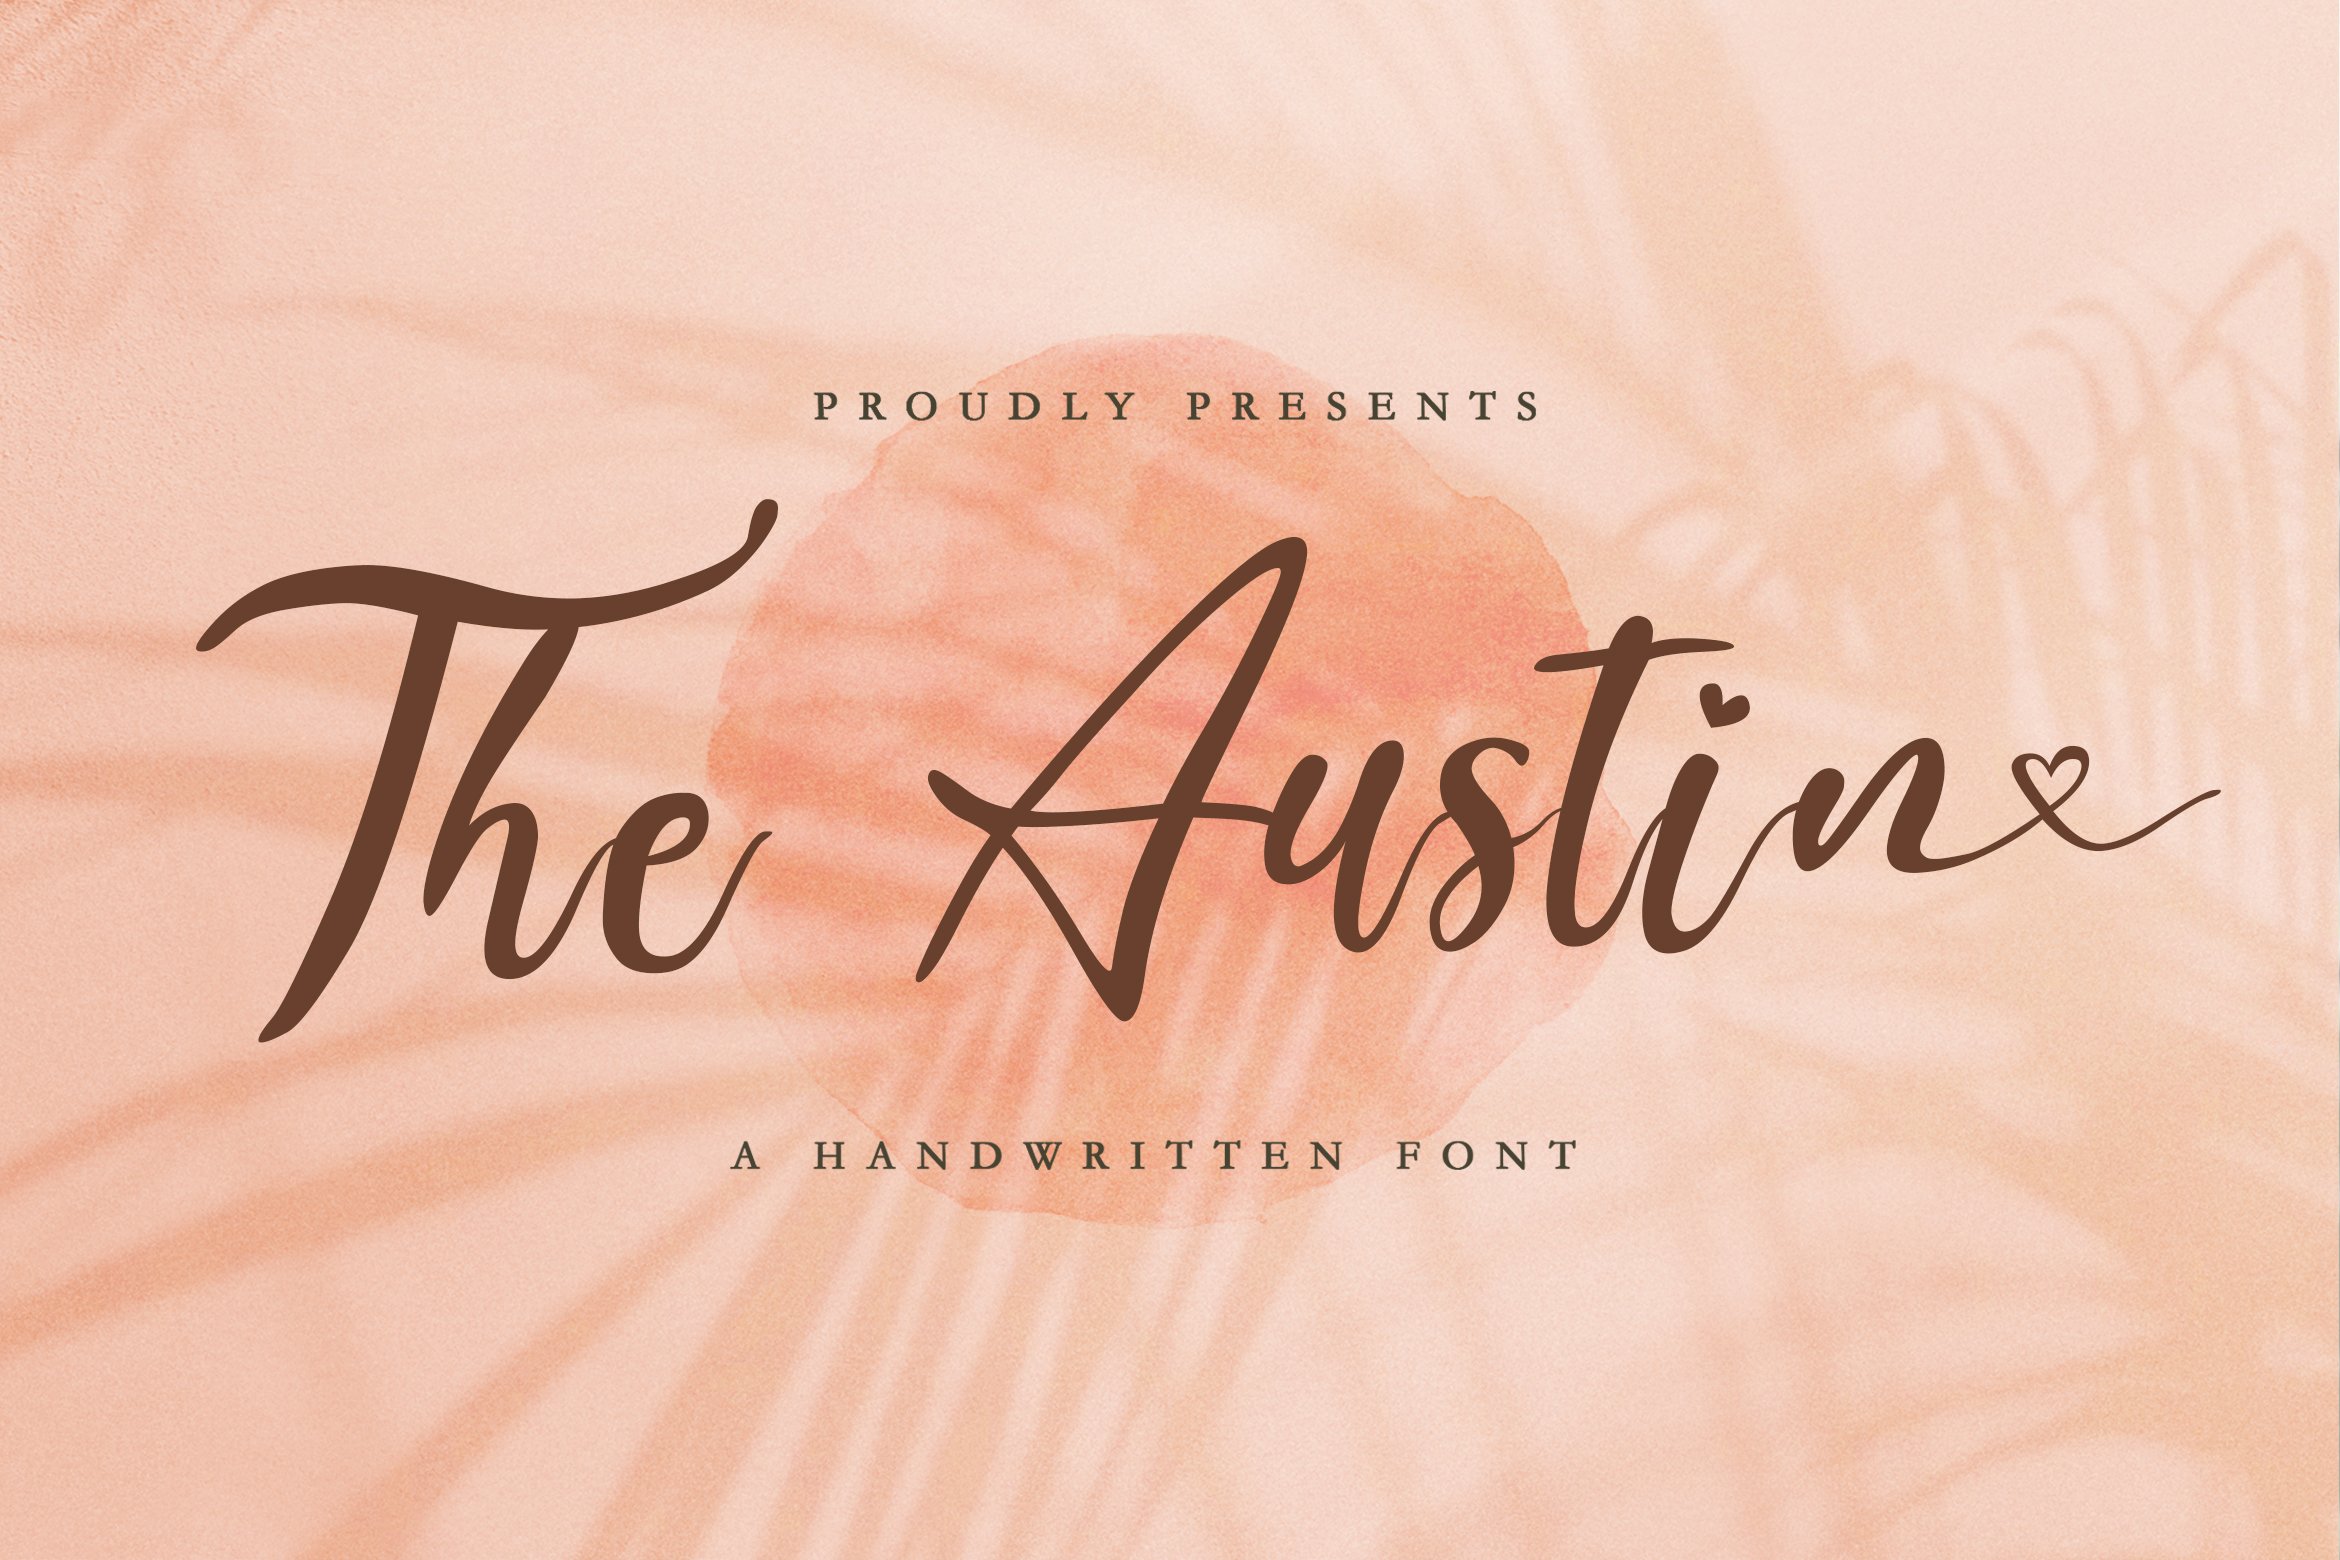 The Austin - Handwritten Script Font cover image.